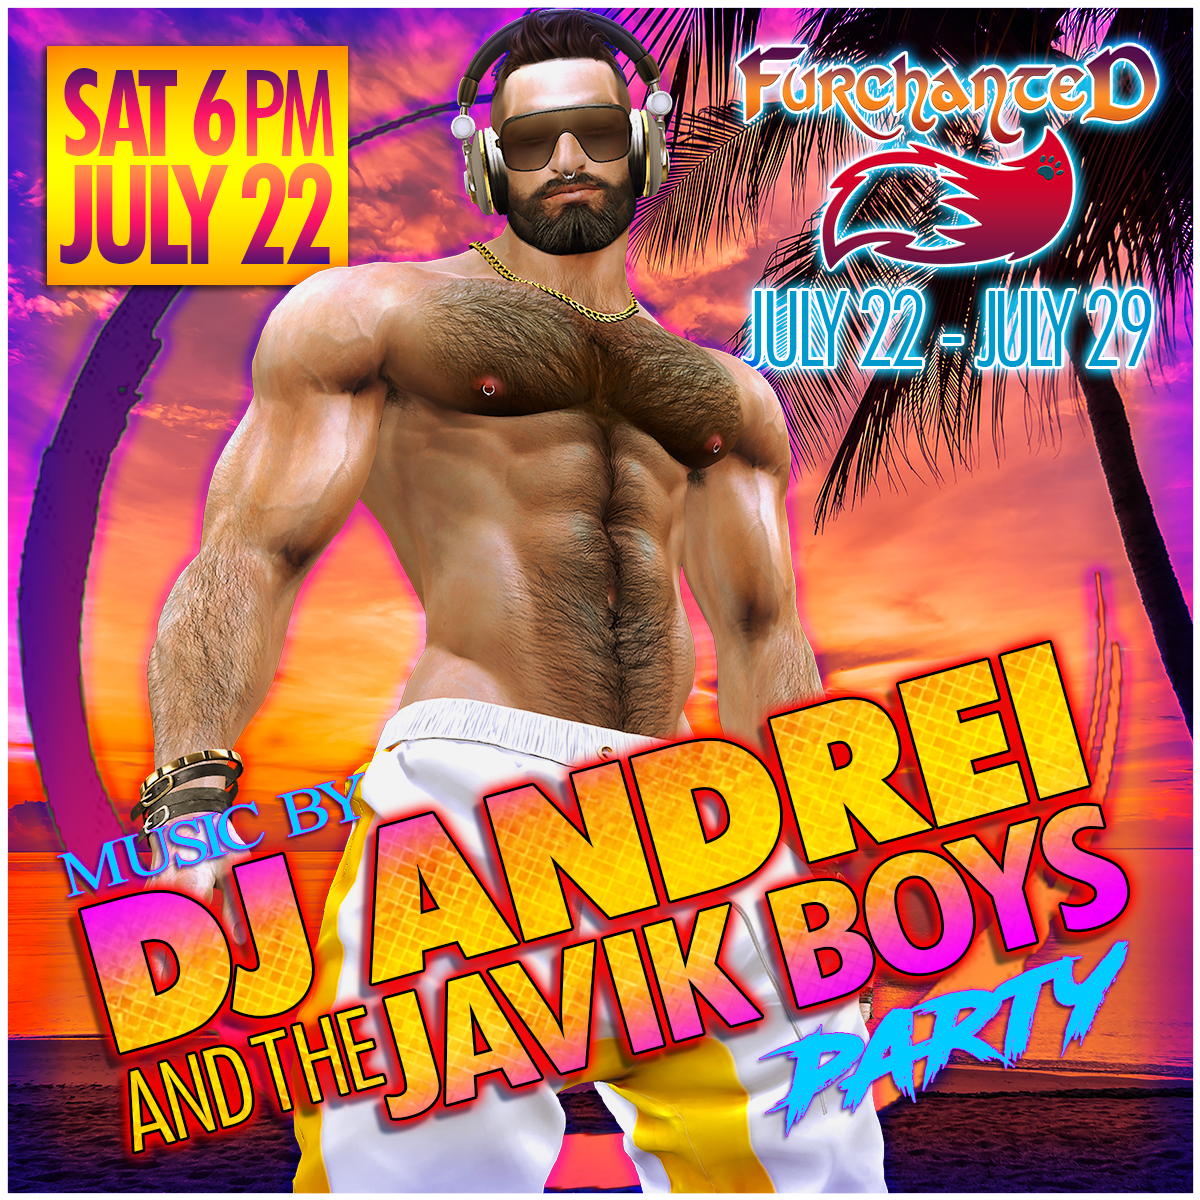 SATURDAY: DJ ANDREI & THE JAVIK BOYS @ FURCHANTED!